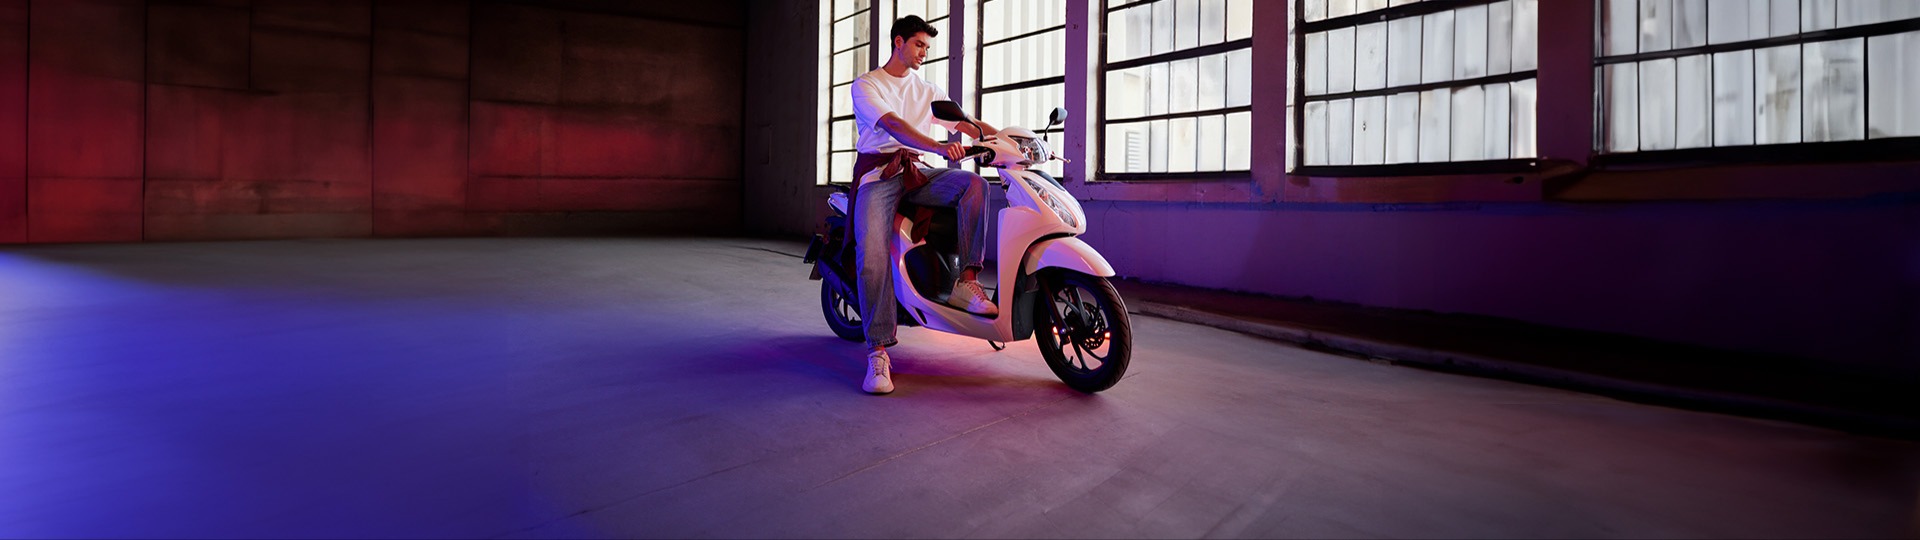  Honda Tansoy 40.000 TL’ye vade farksız 12 ay taksitle sizin de ilk motosikletiniz Honda Dio olsun.